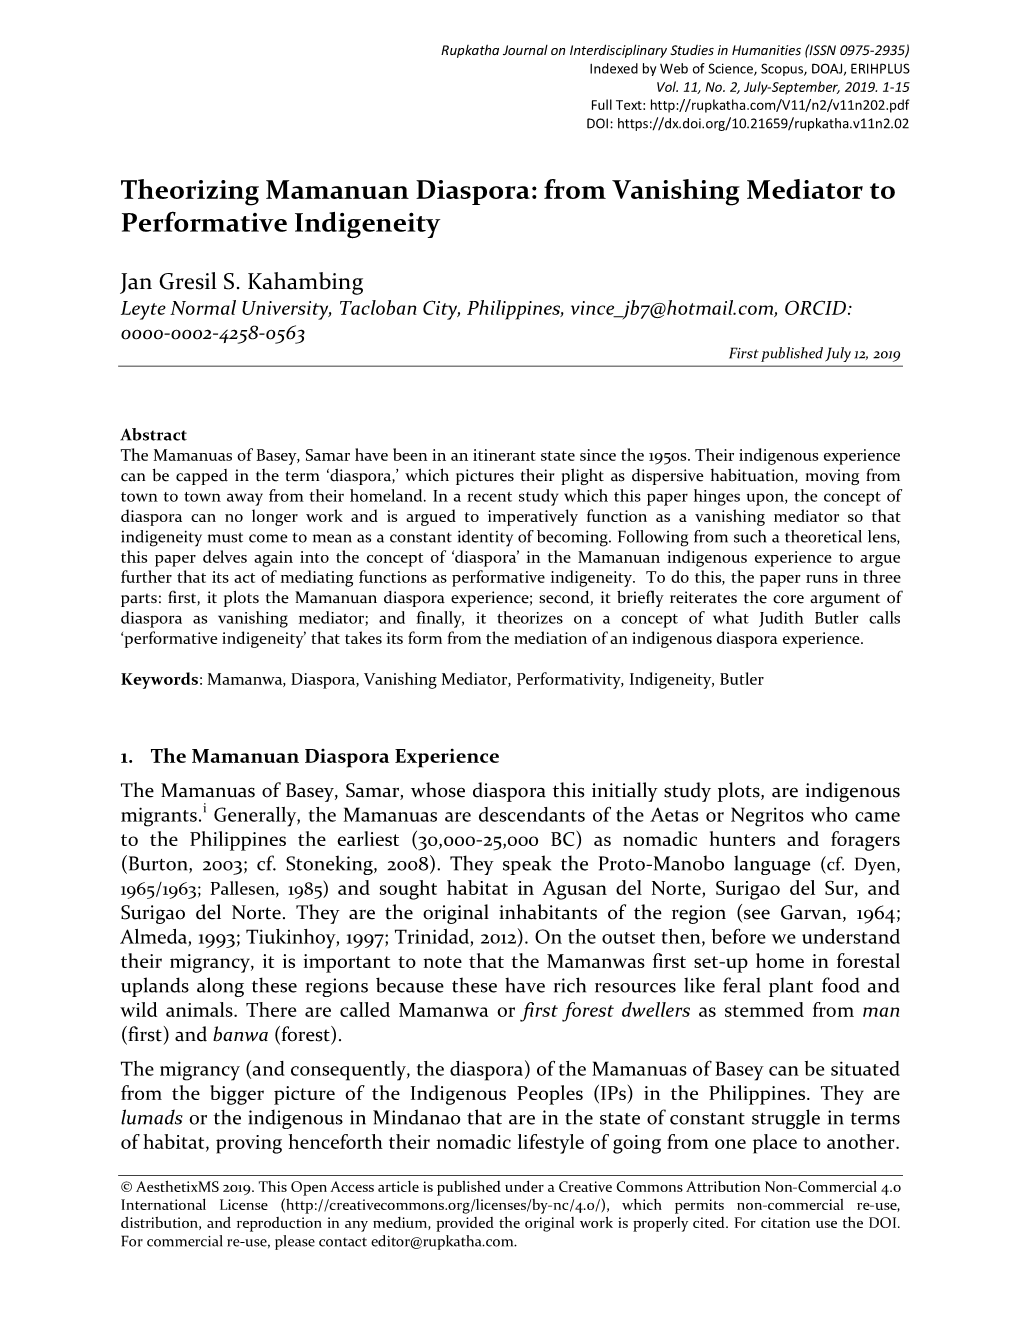 Theorizing Mamanuan Diaspora: from Vanishing Mediator to Performative Indigeneity